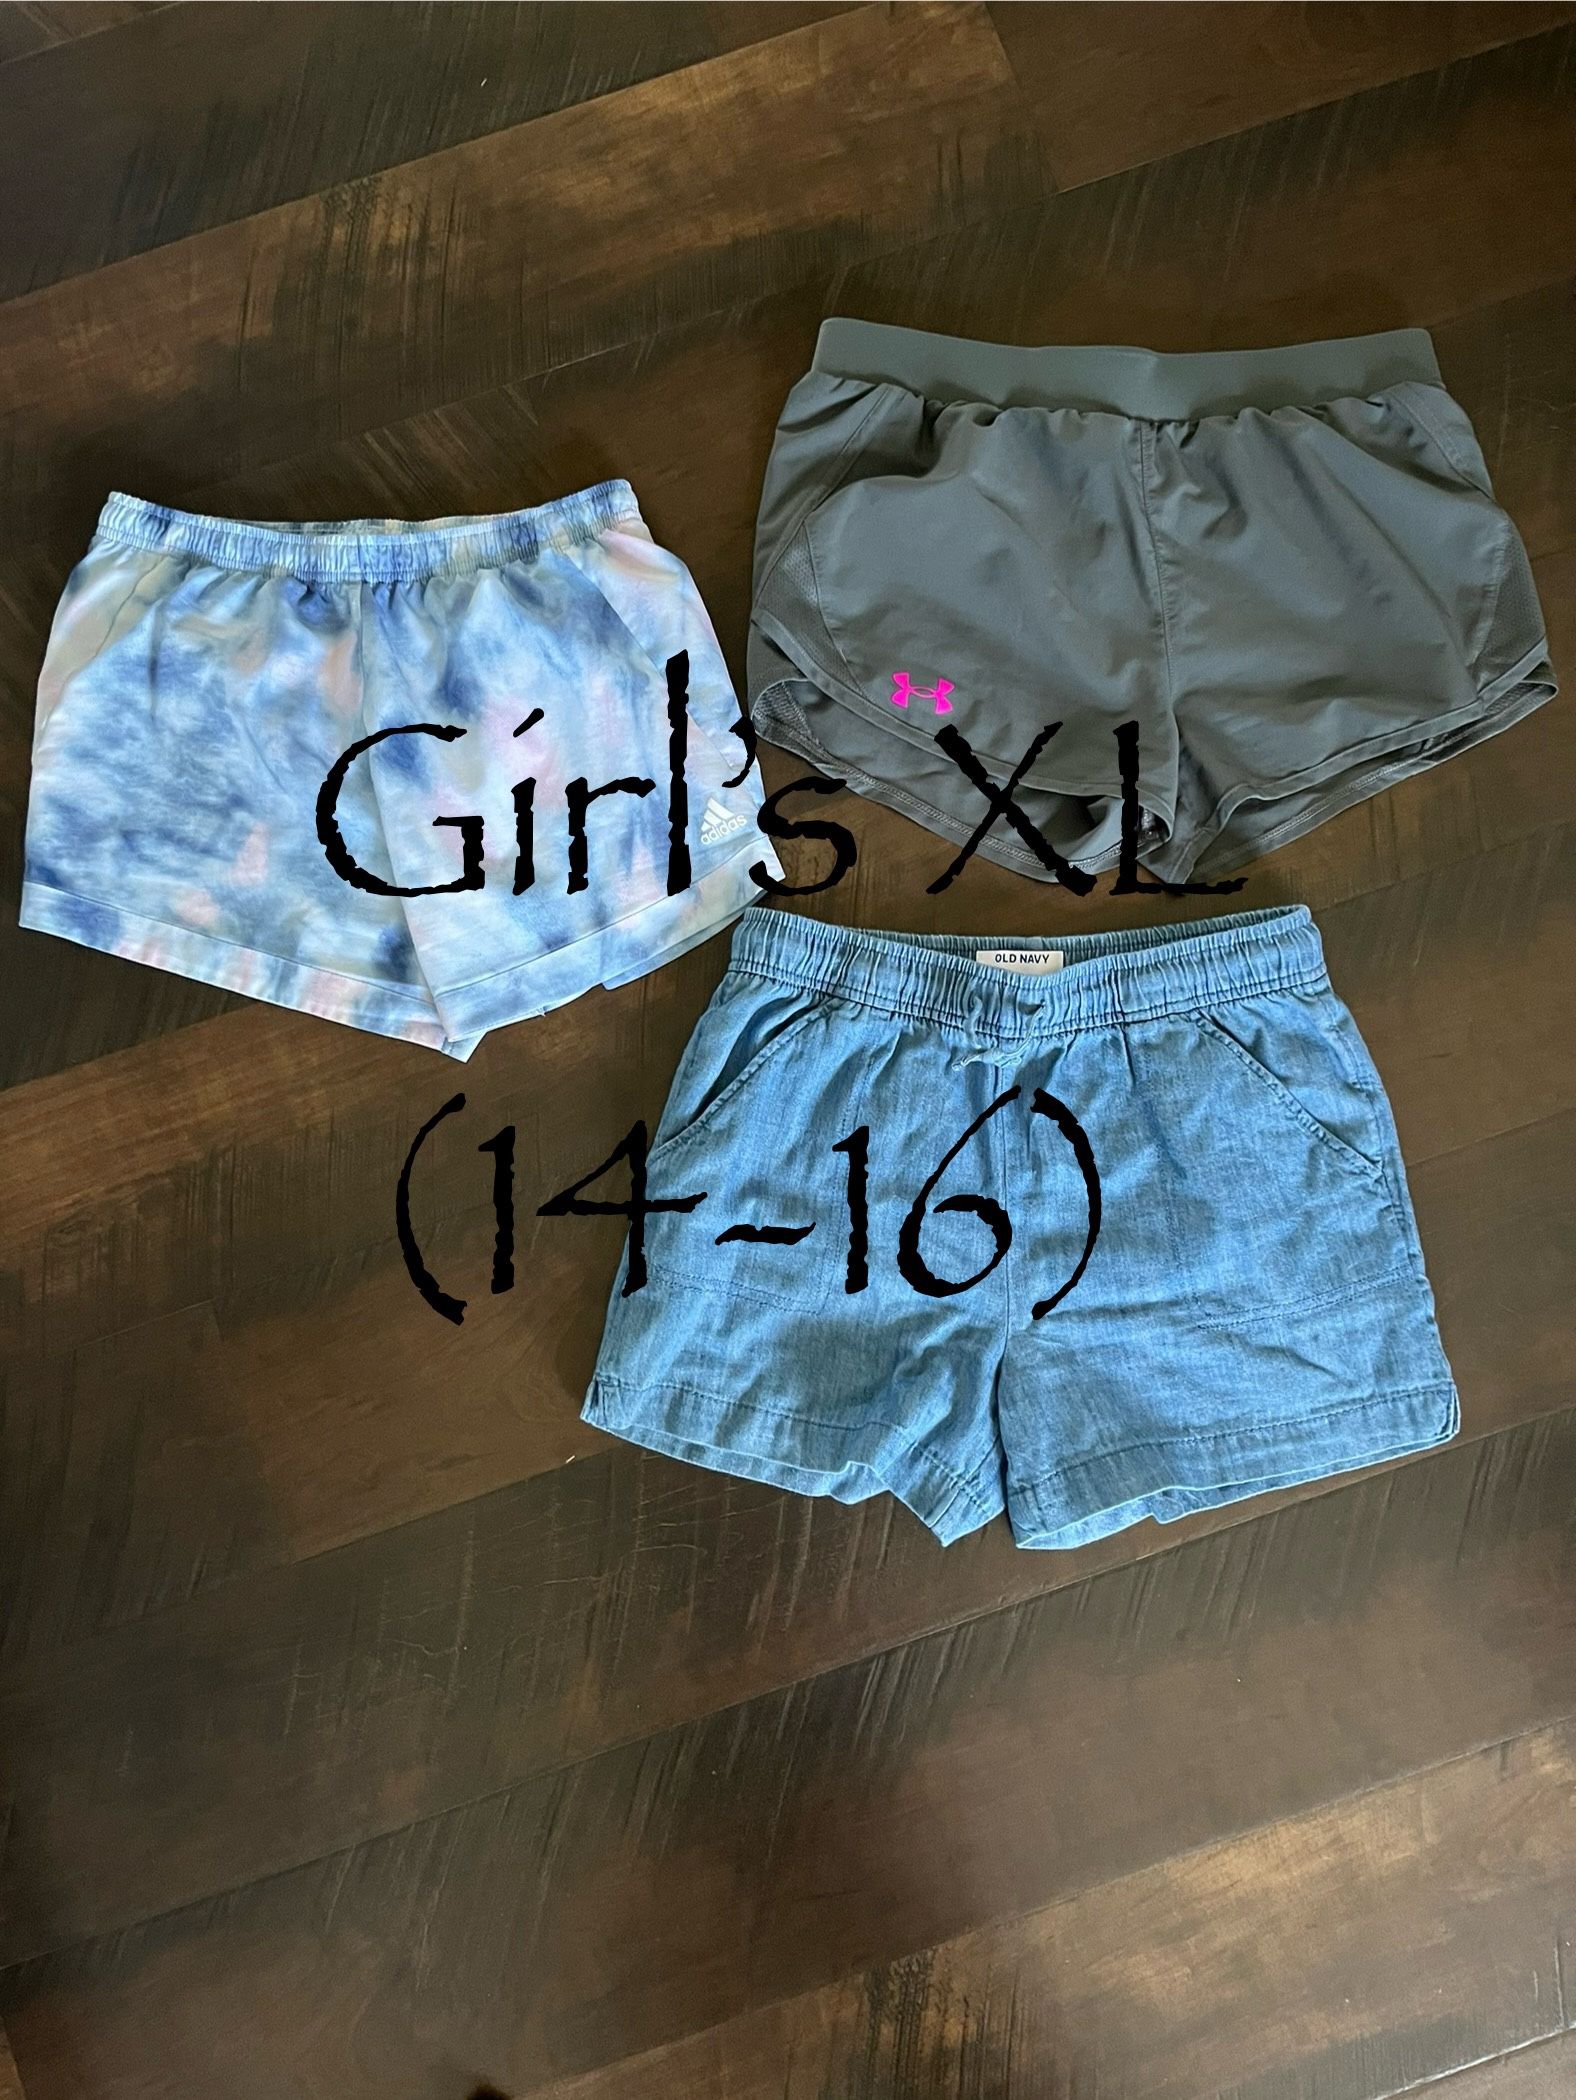 Girl’s XL Short (Size 14-16)